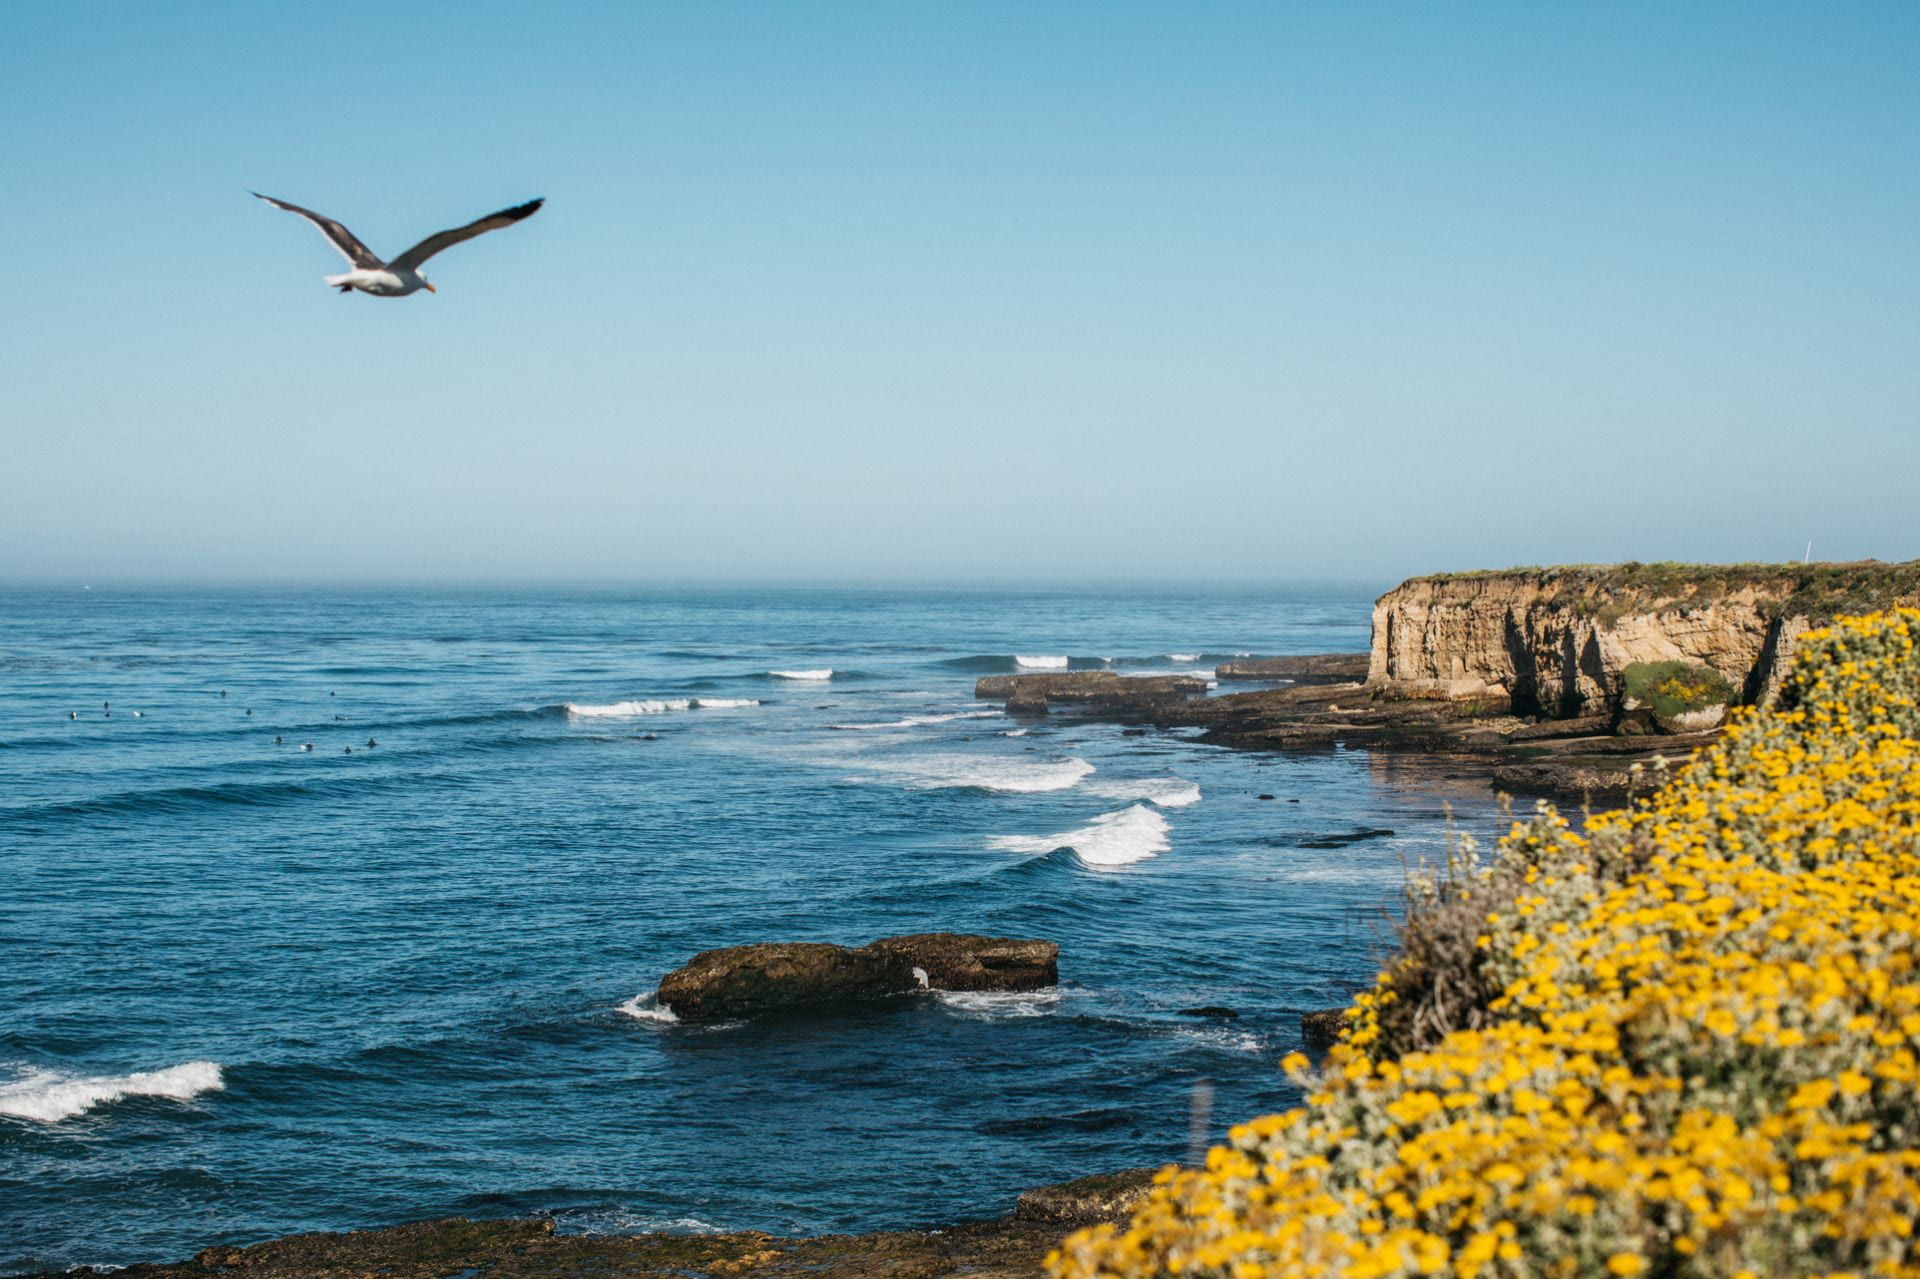 A view of the ocean and coastline in Santa Cruz